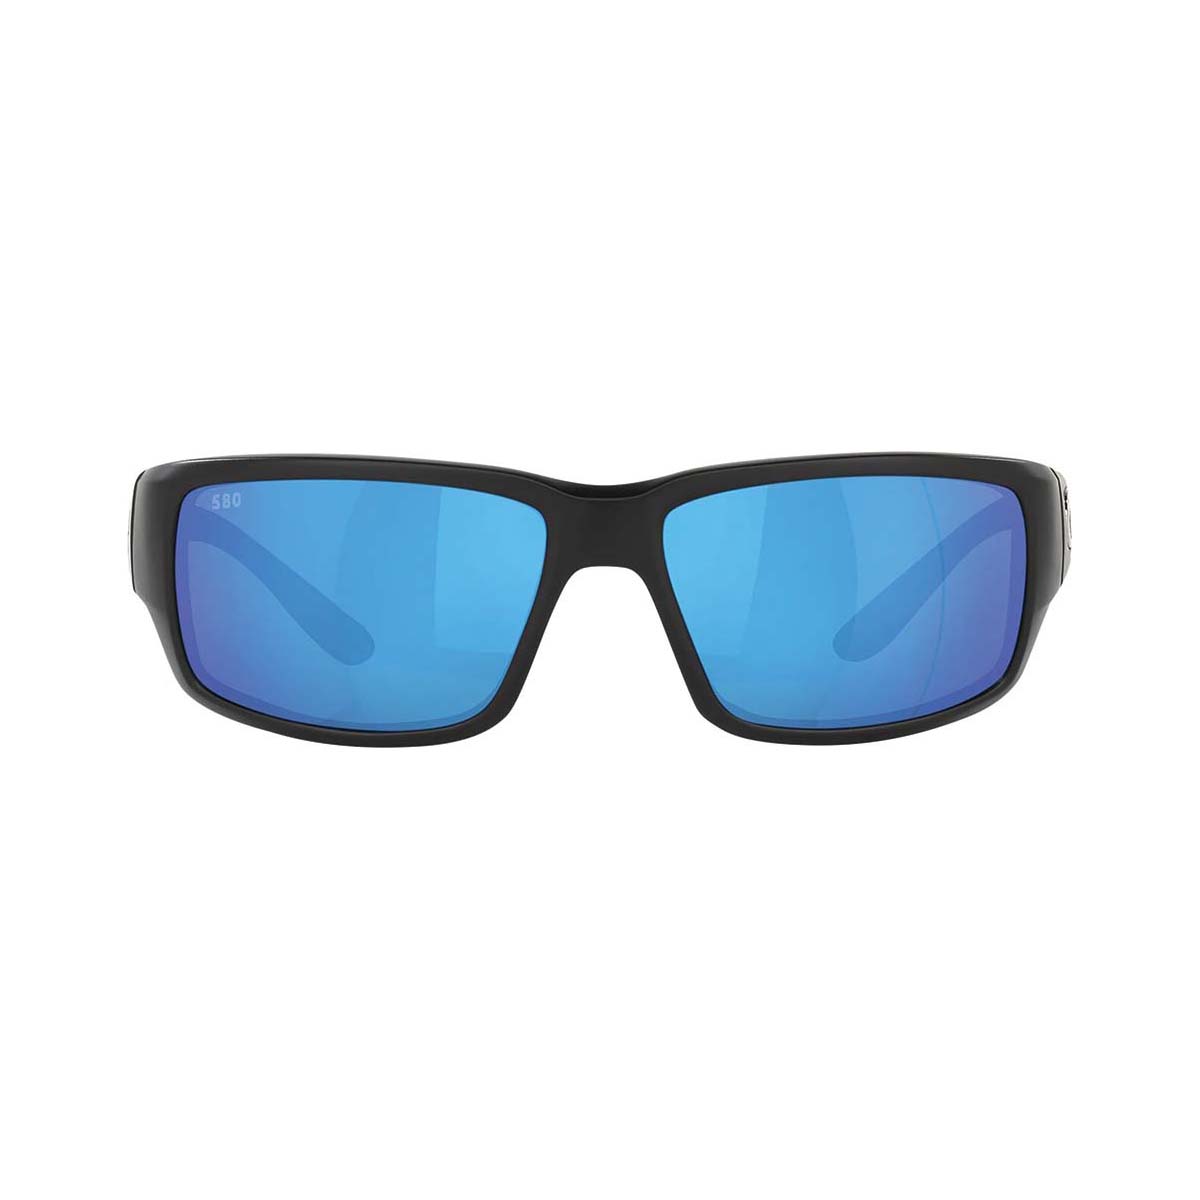 Costa Fantail Men's Sunglasses Black with Blue Lens